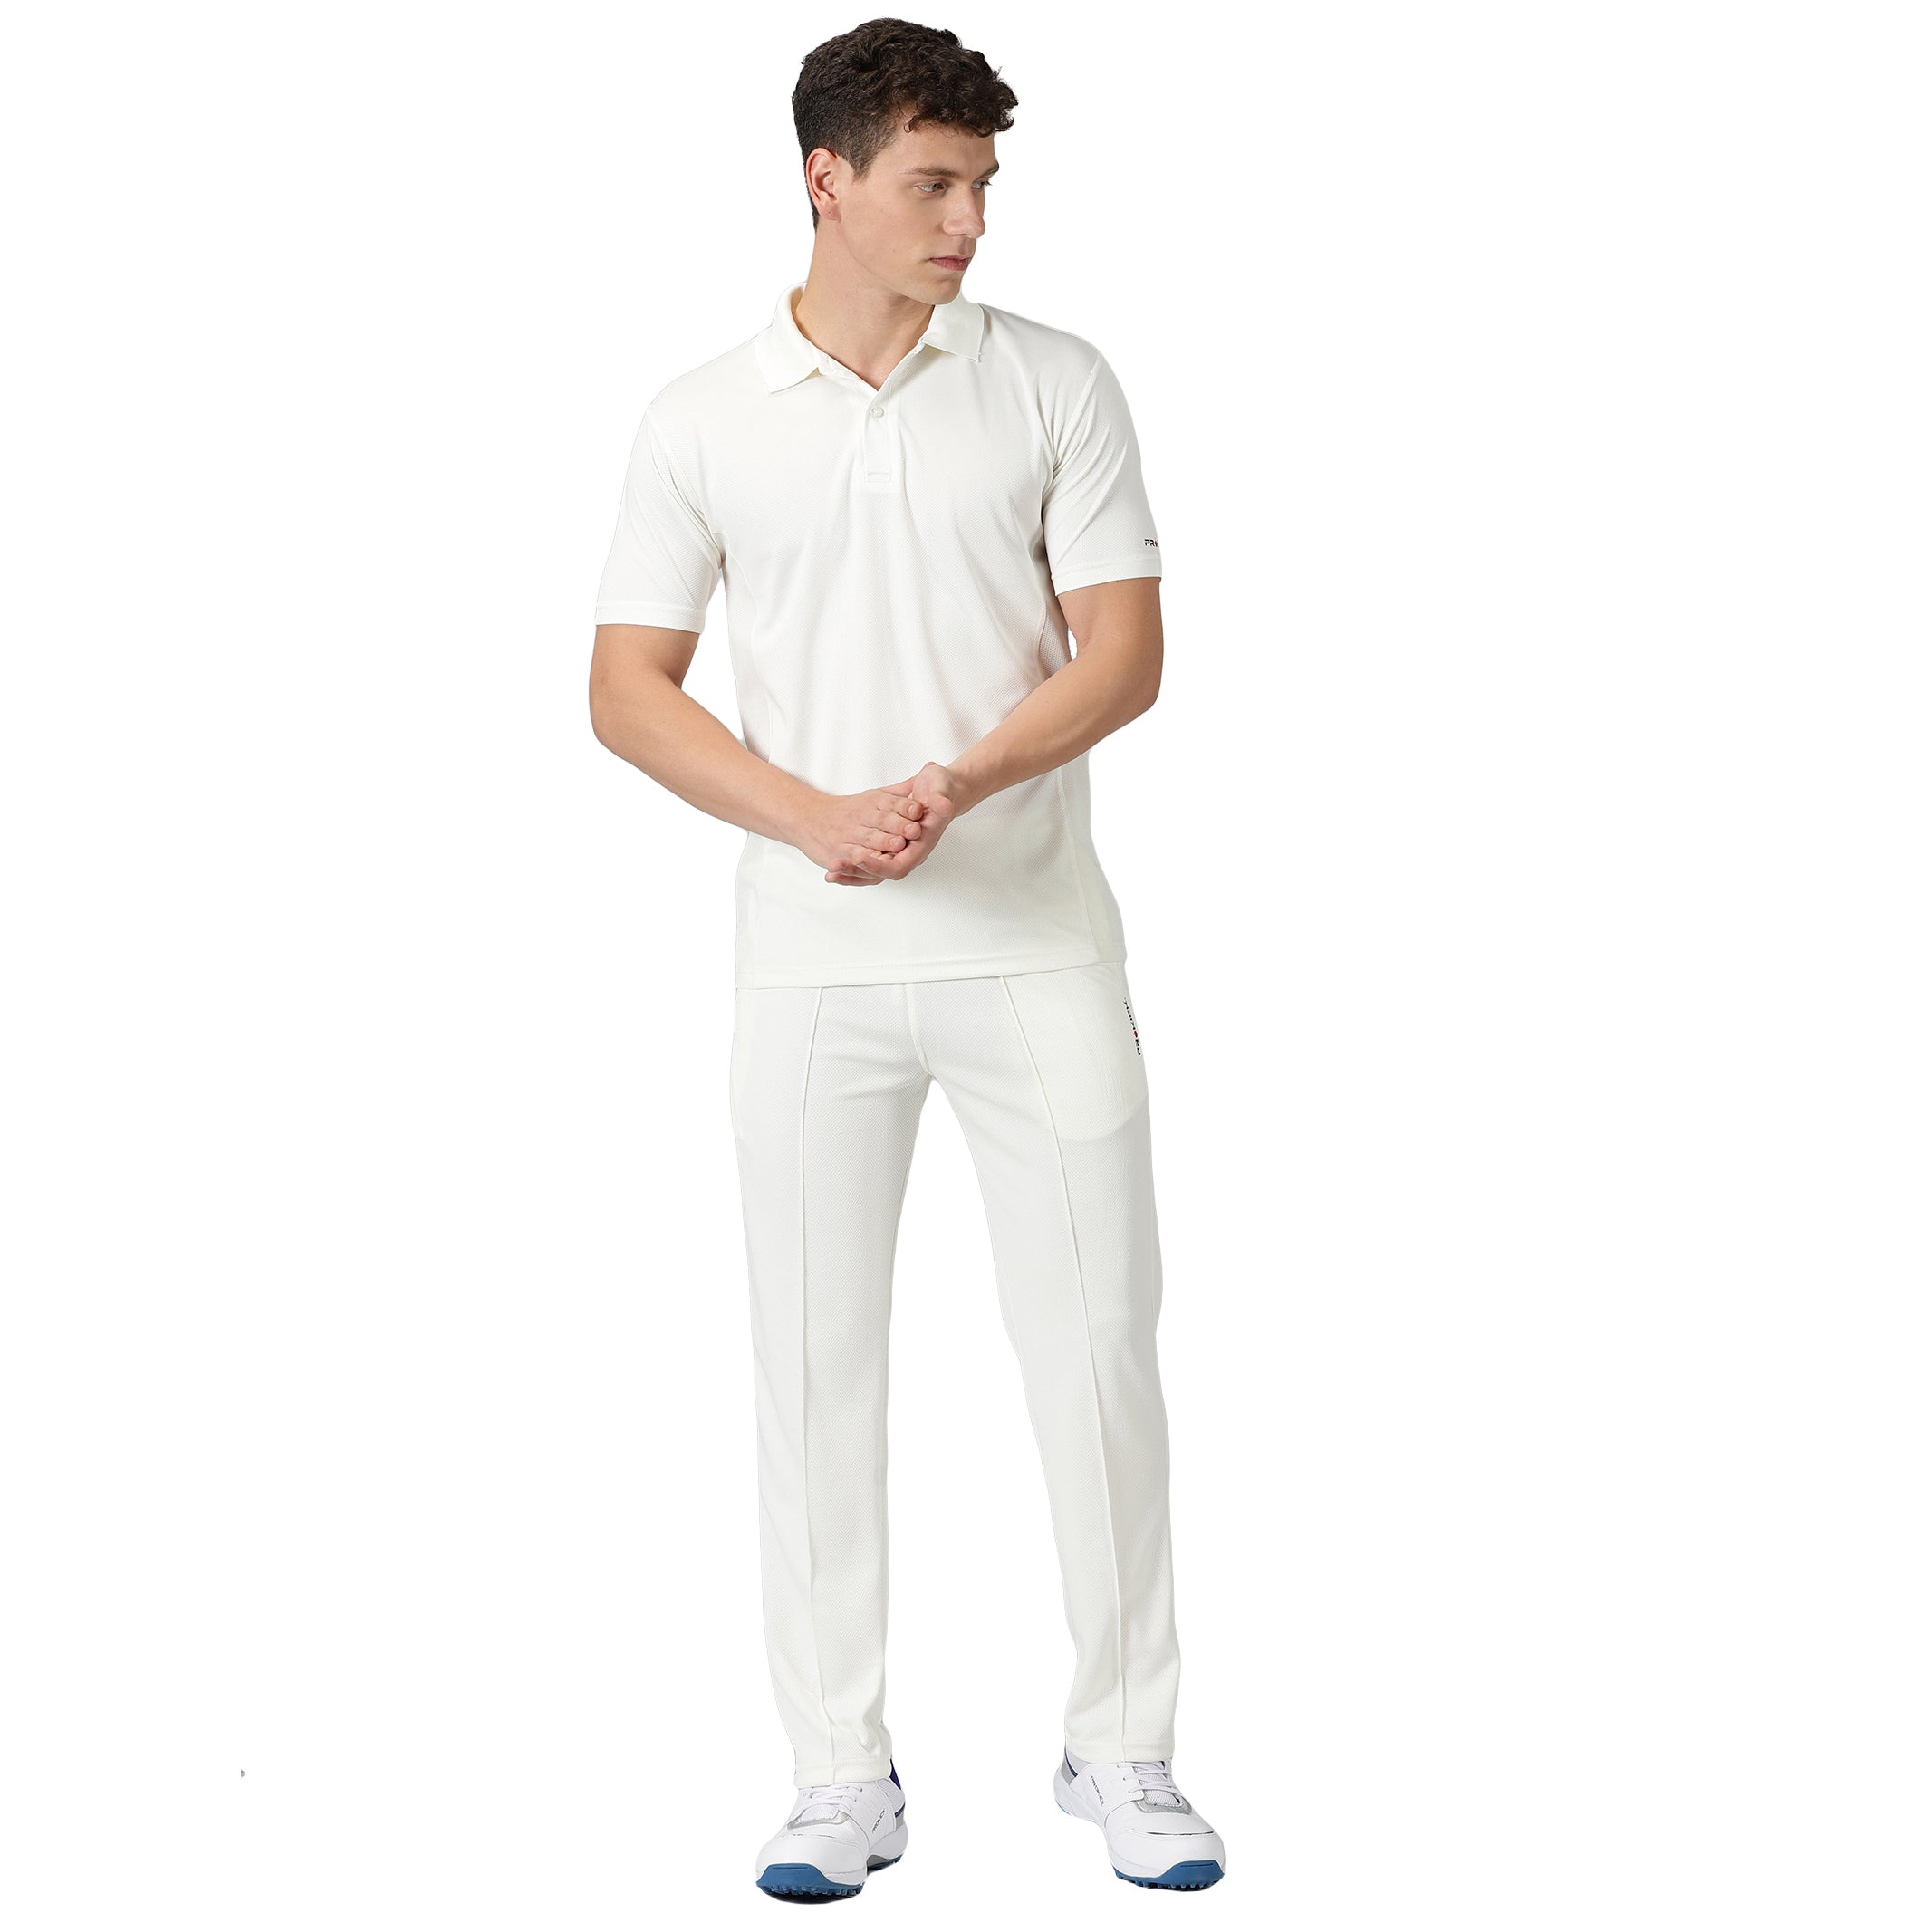 Light house sports shop | Test match White trouser and shirts | Domestic  Hardball Cricket kit - YouTube